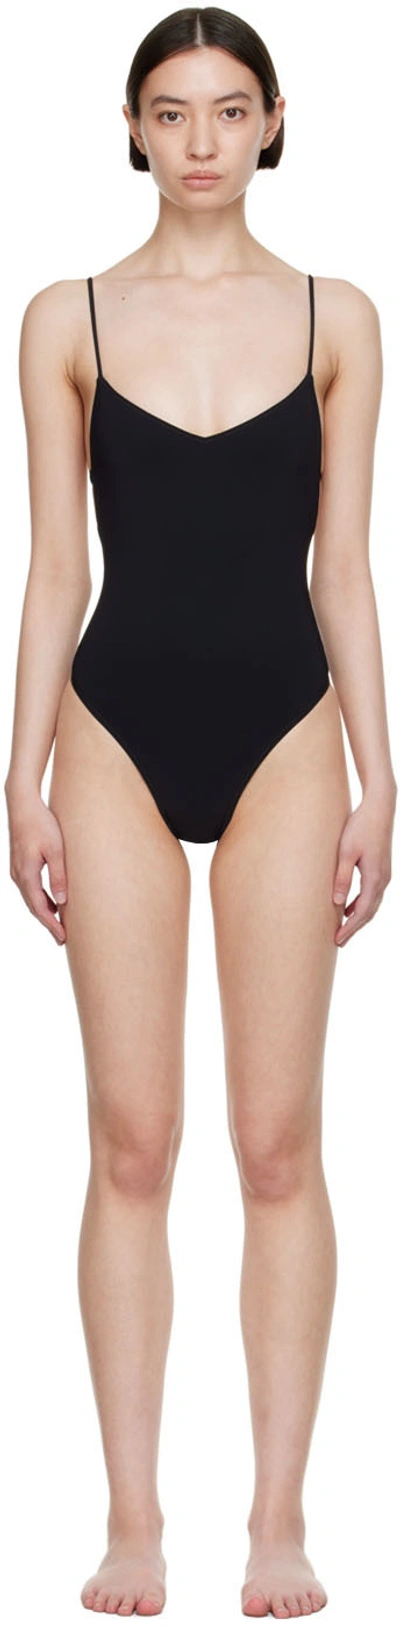 Lido Black Ventiquattro One-piece Swimsuit